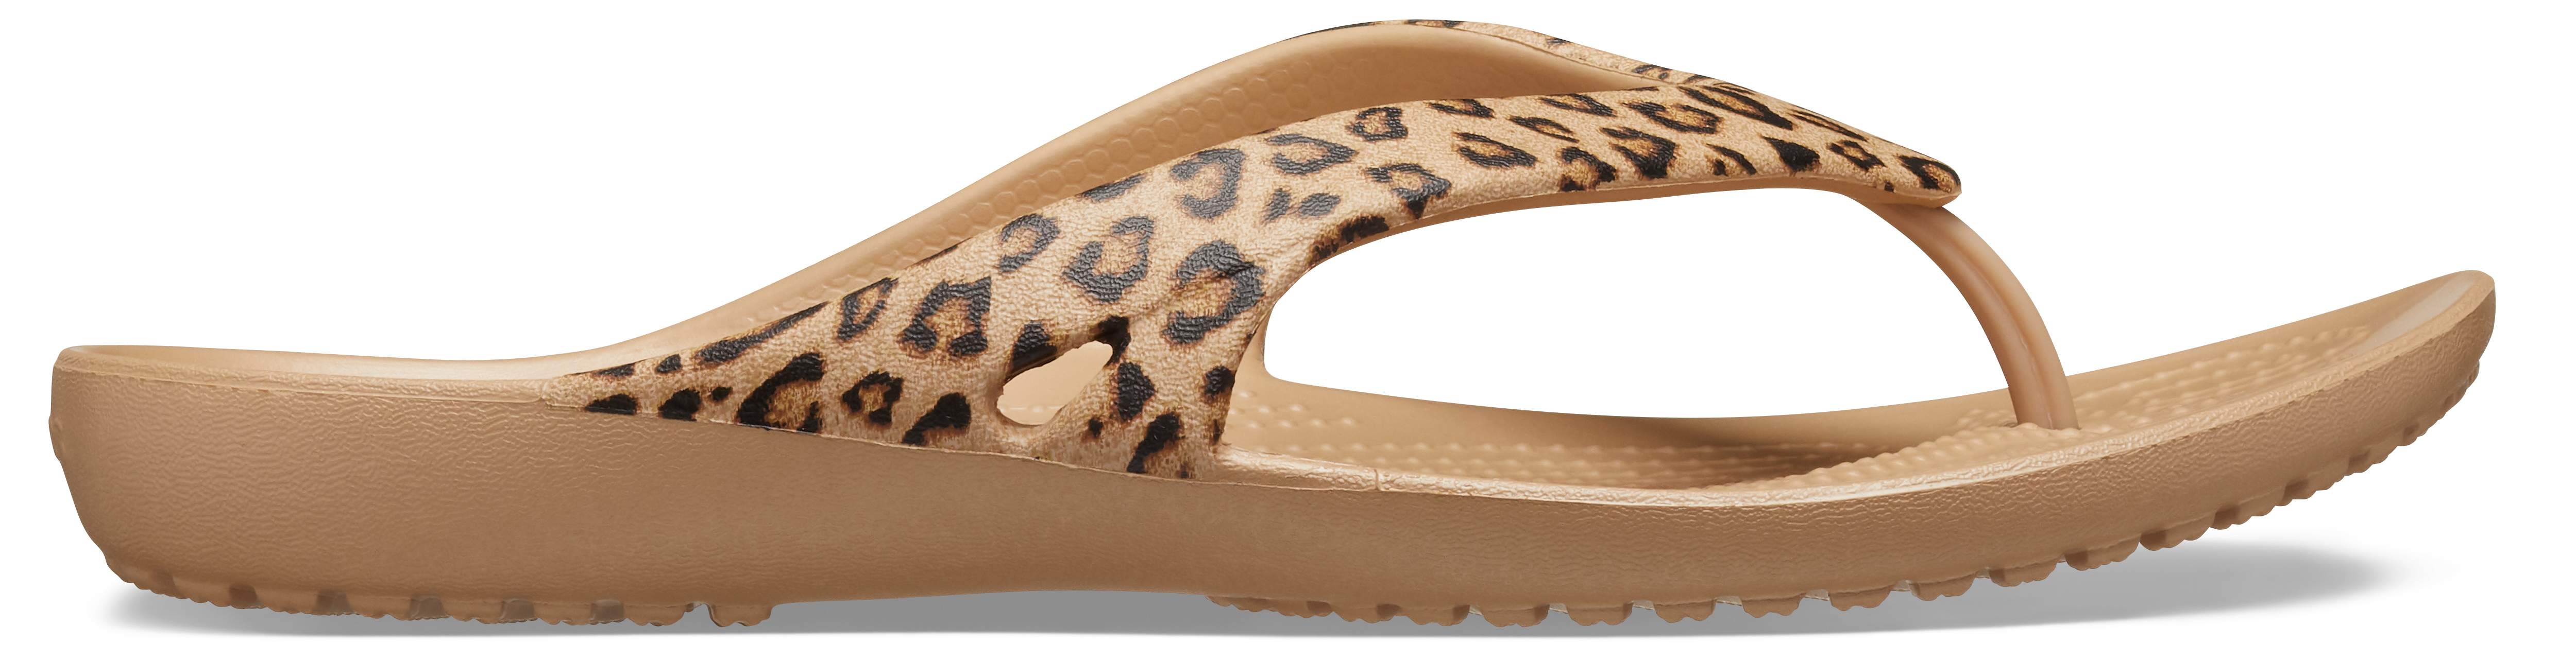 crocs kadee leopard print flip flop